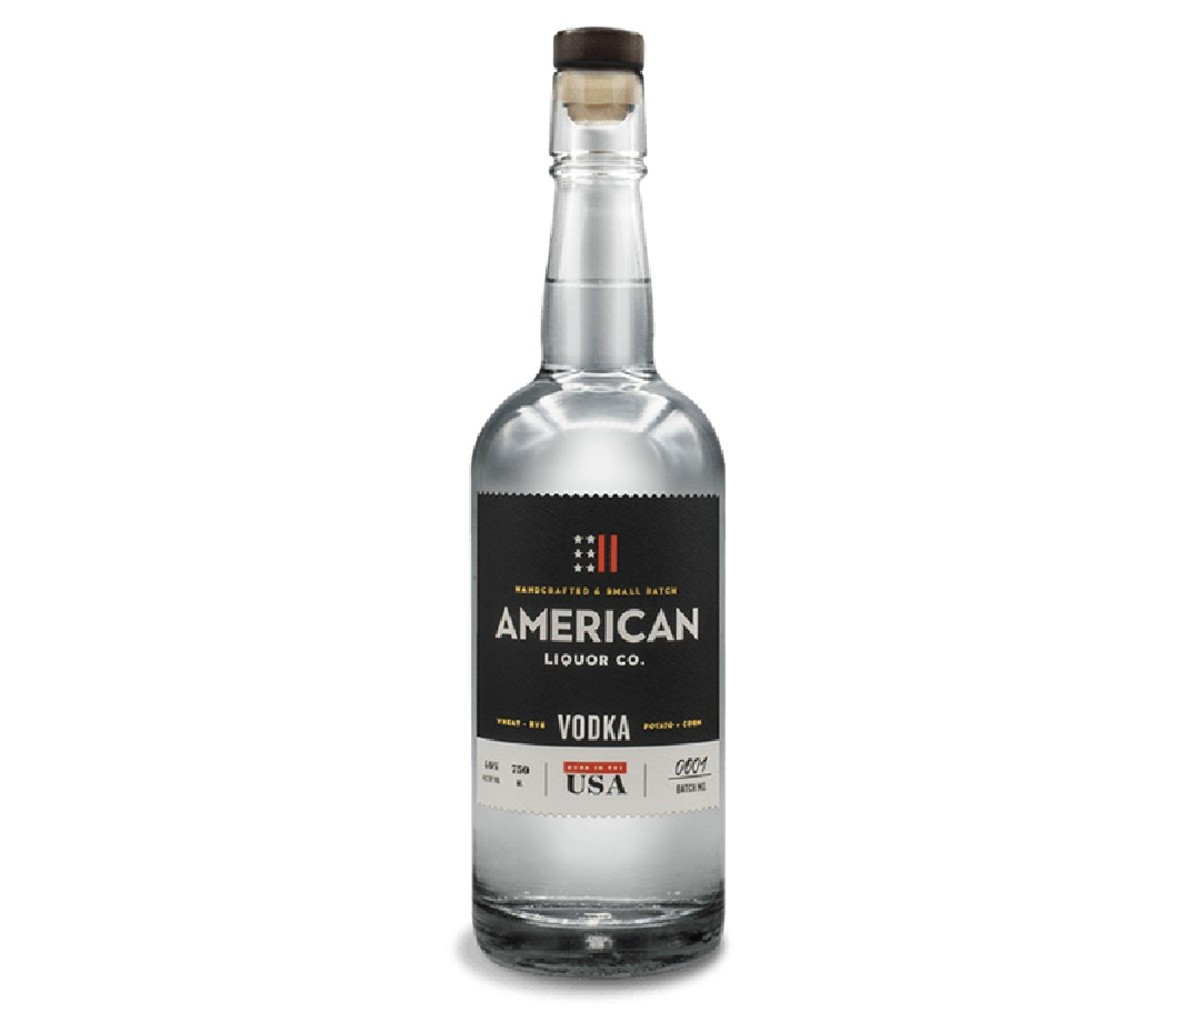 A bottle of American liquor company vodka